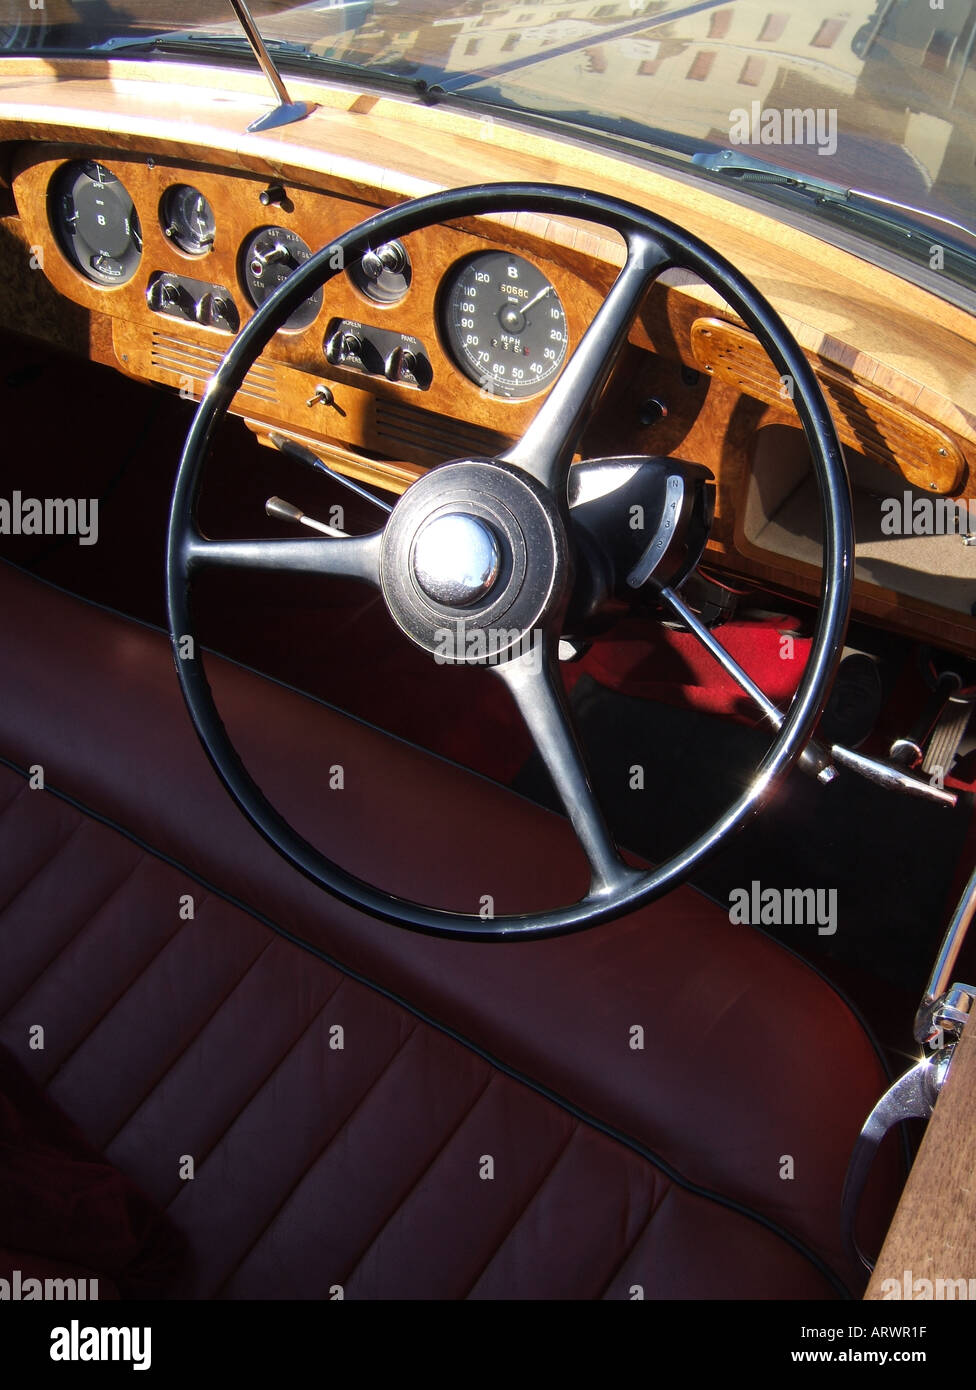 bentley classic car interior Stock Photo